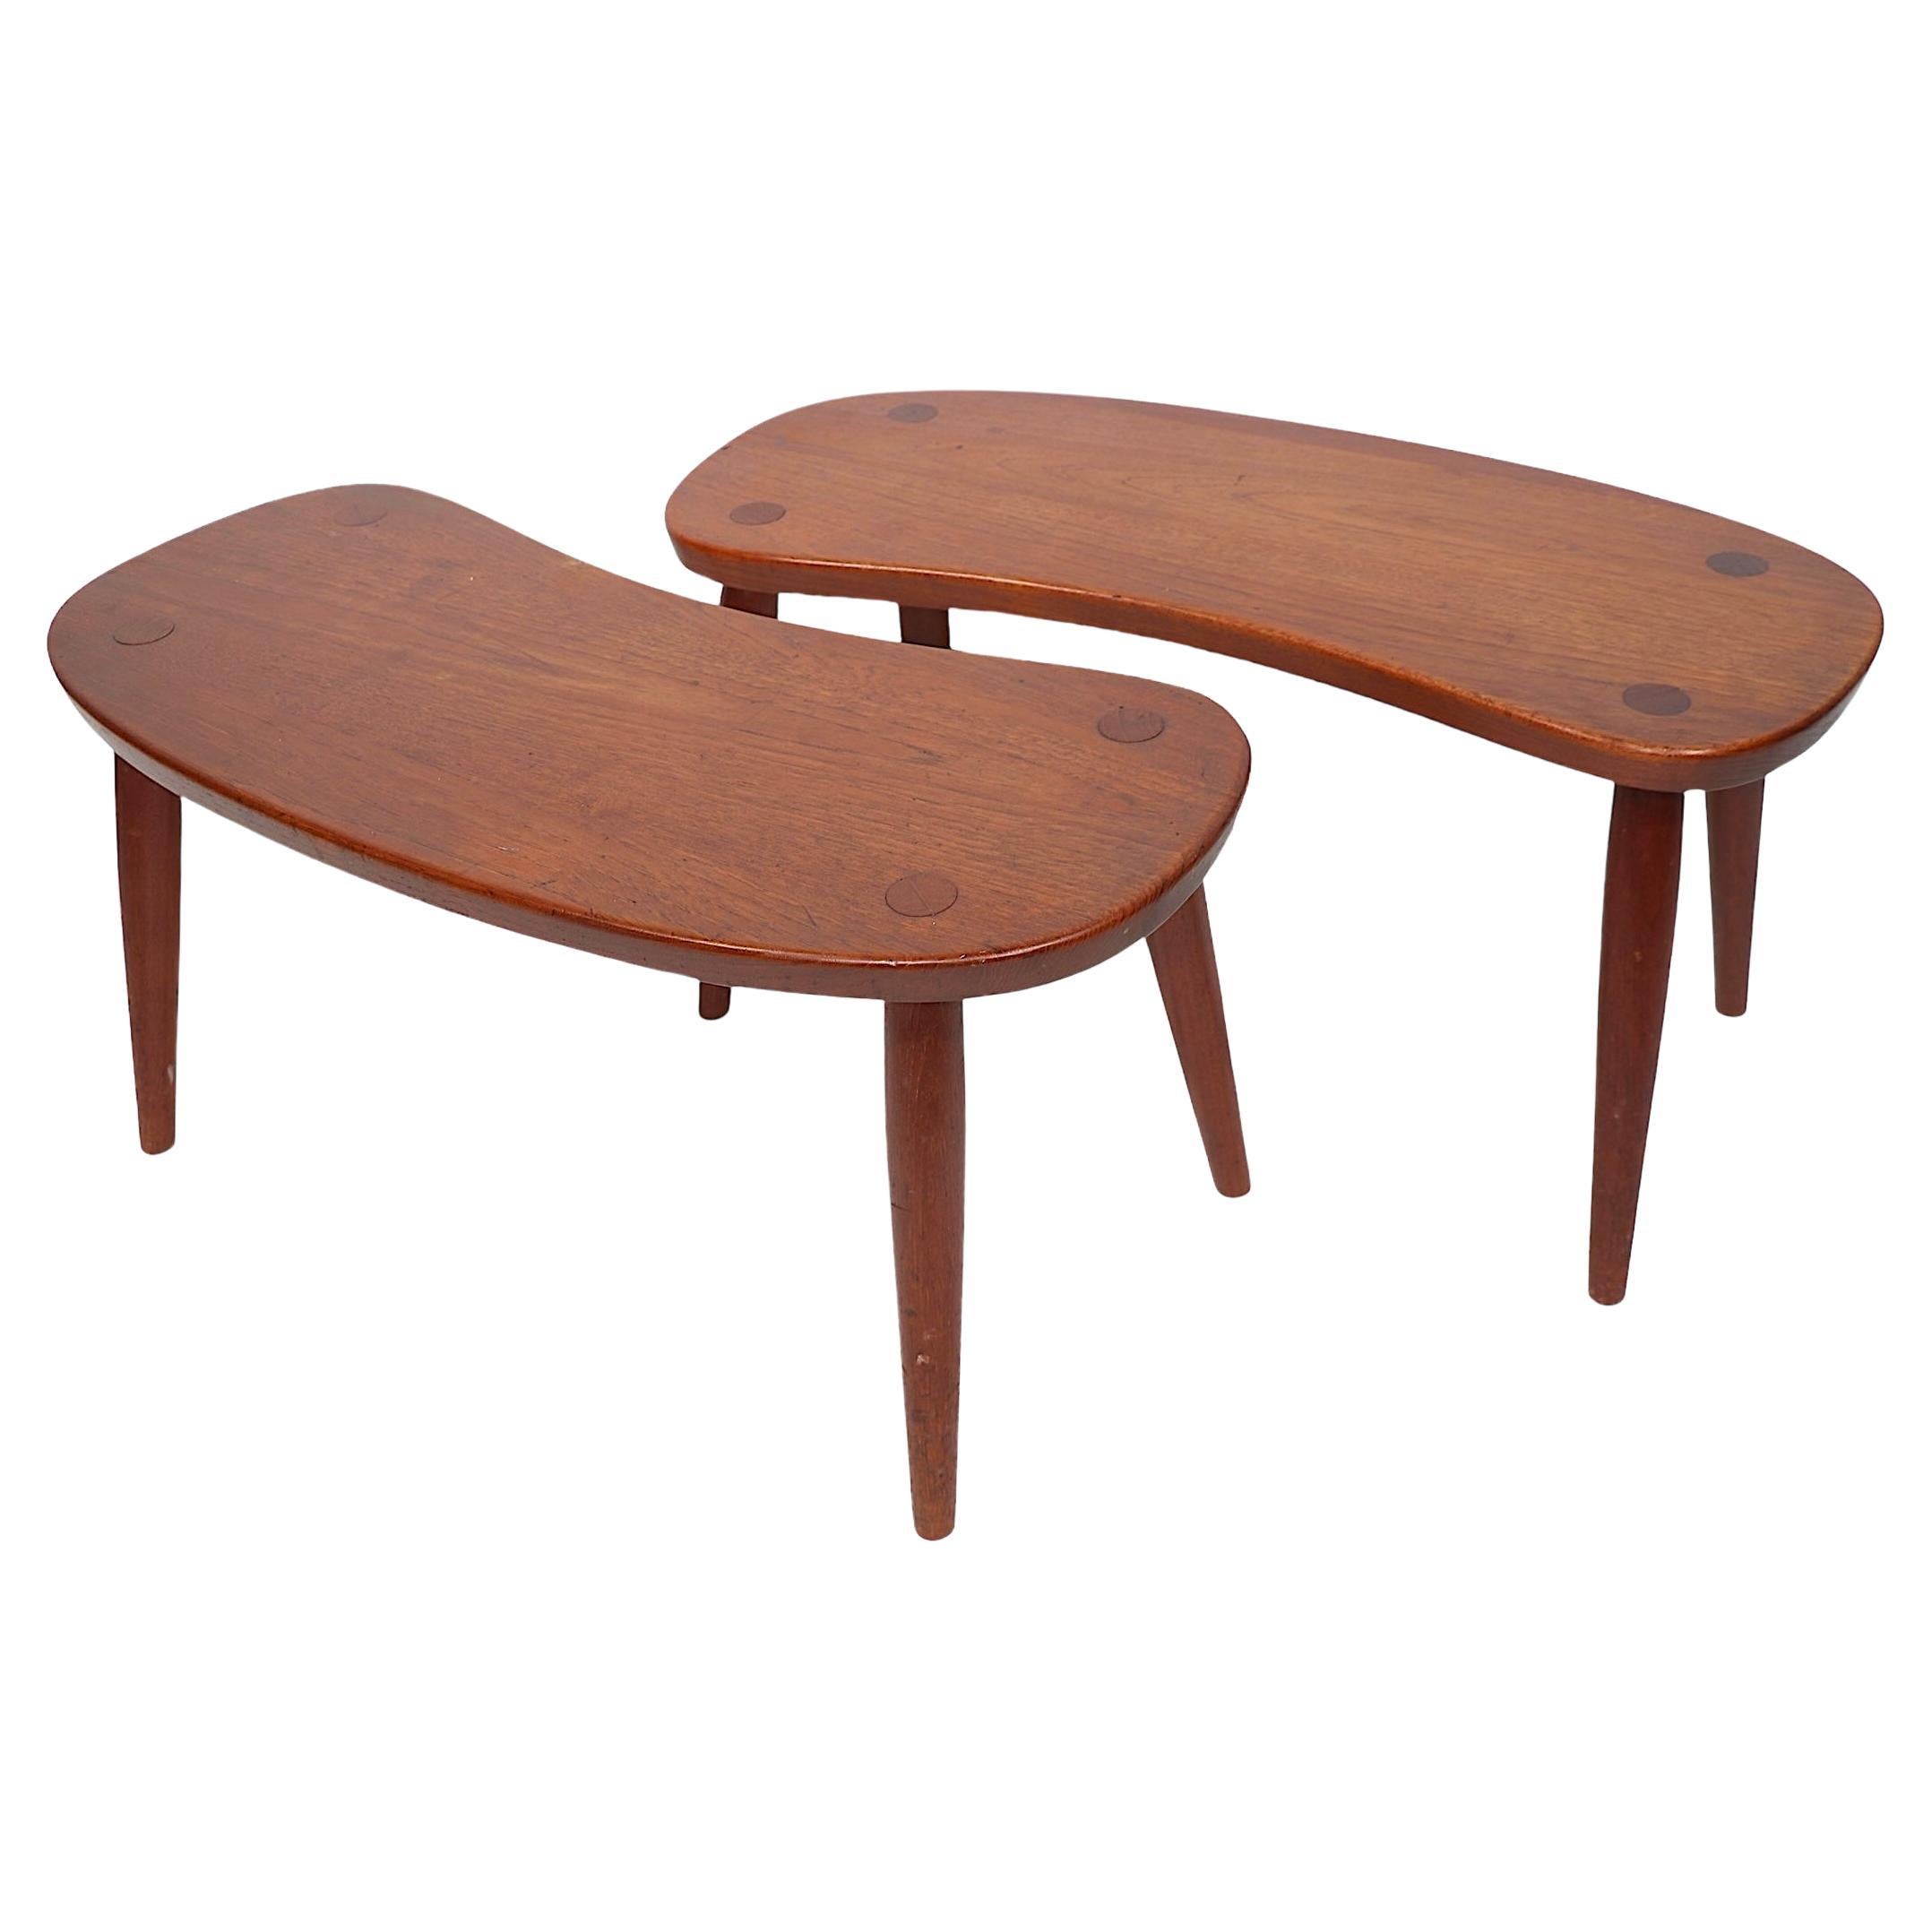 Pr. Danish Mid Century Modern Tables Made by Illum Bolighus att. to Josef Frank  For Sale